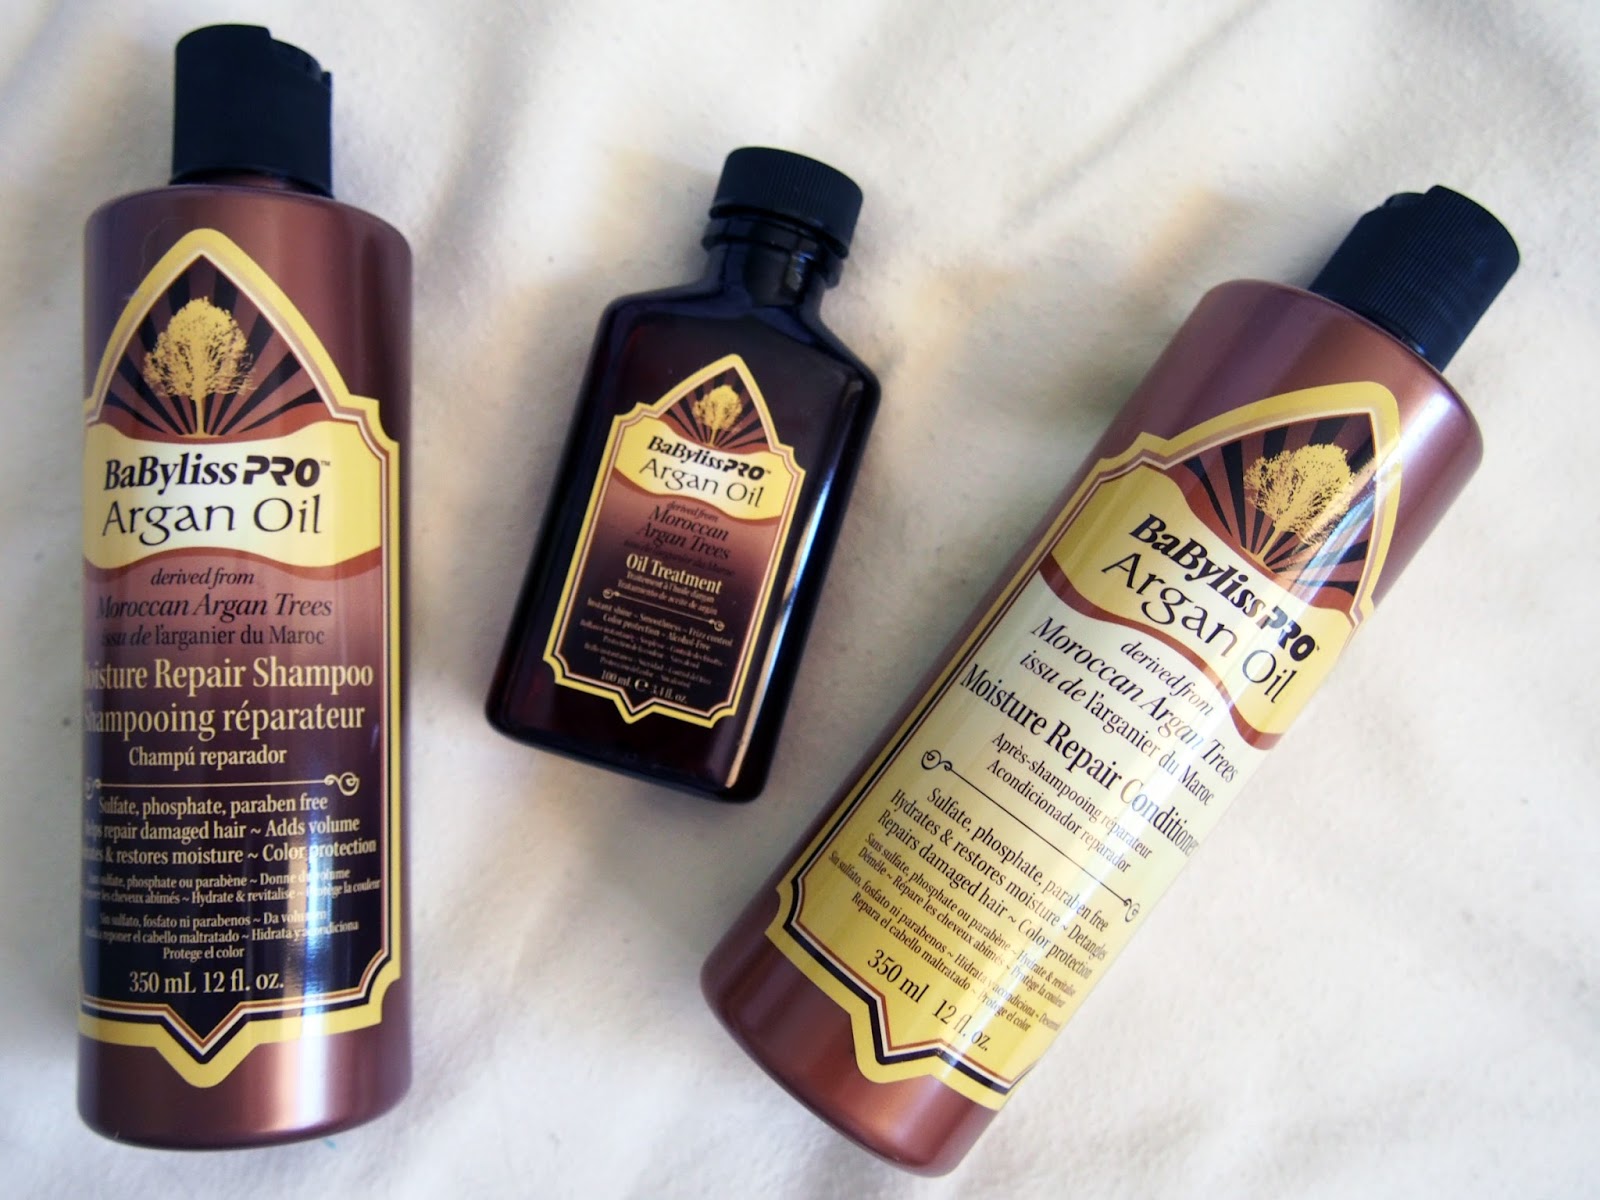 szampon babyliss pro argan oil opinie